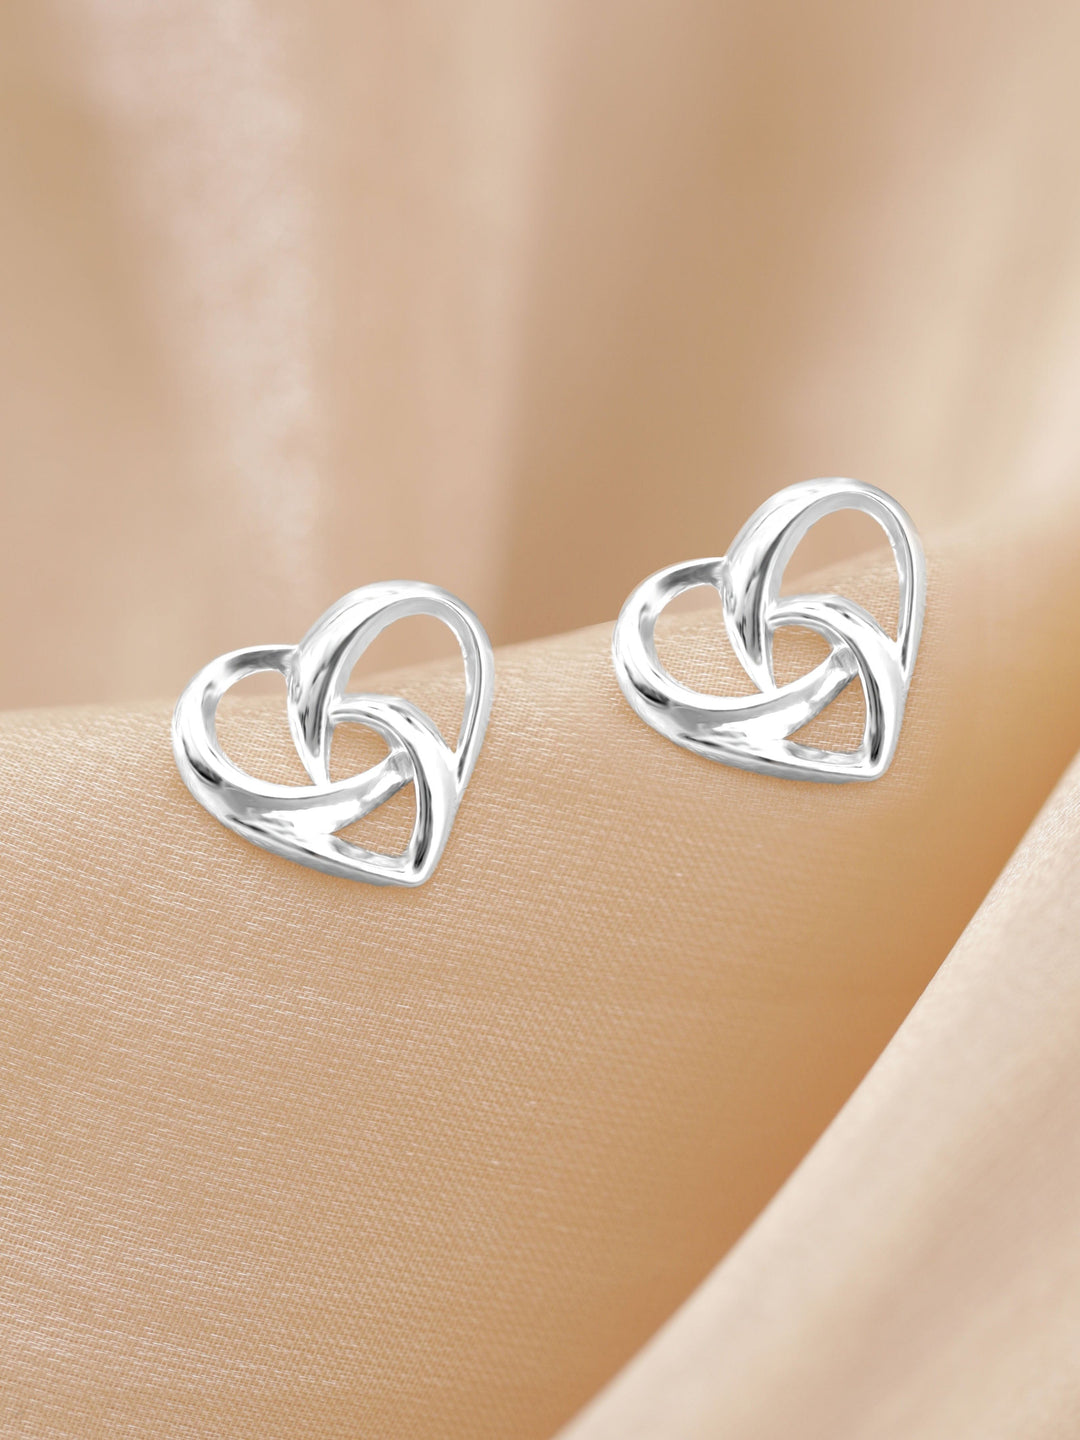 Rubans Silver Rhodium-Plated Heart Shaped Studs Earrings Earrings